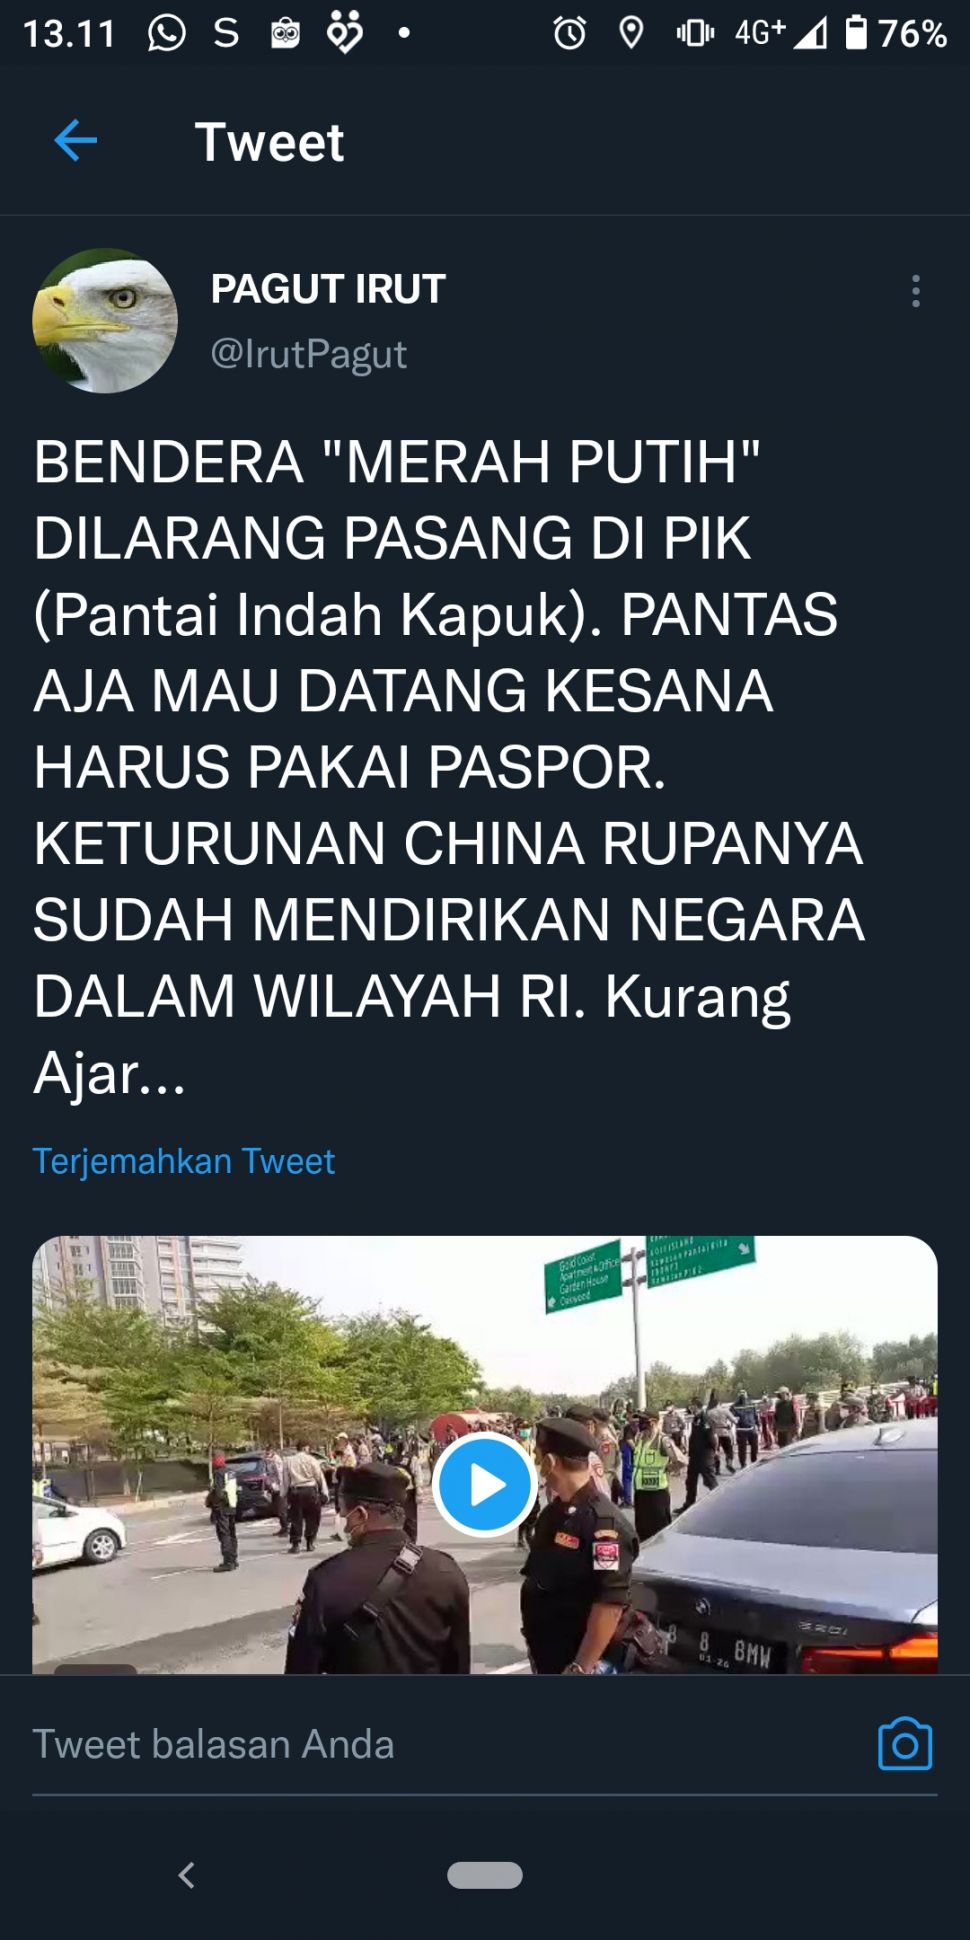 Sebuah video viral di media sosial menyiarkan adanya personel gabungan TNI-Polri menjaga ketat kawasan Pantai Indah Kapuk (PIK), Jakarta Utara. (tangkao layar)